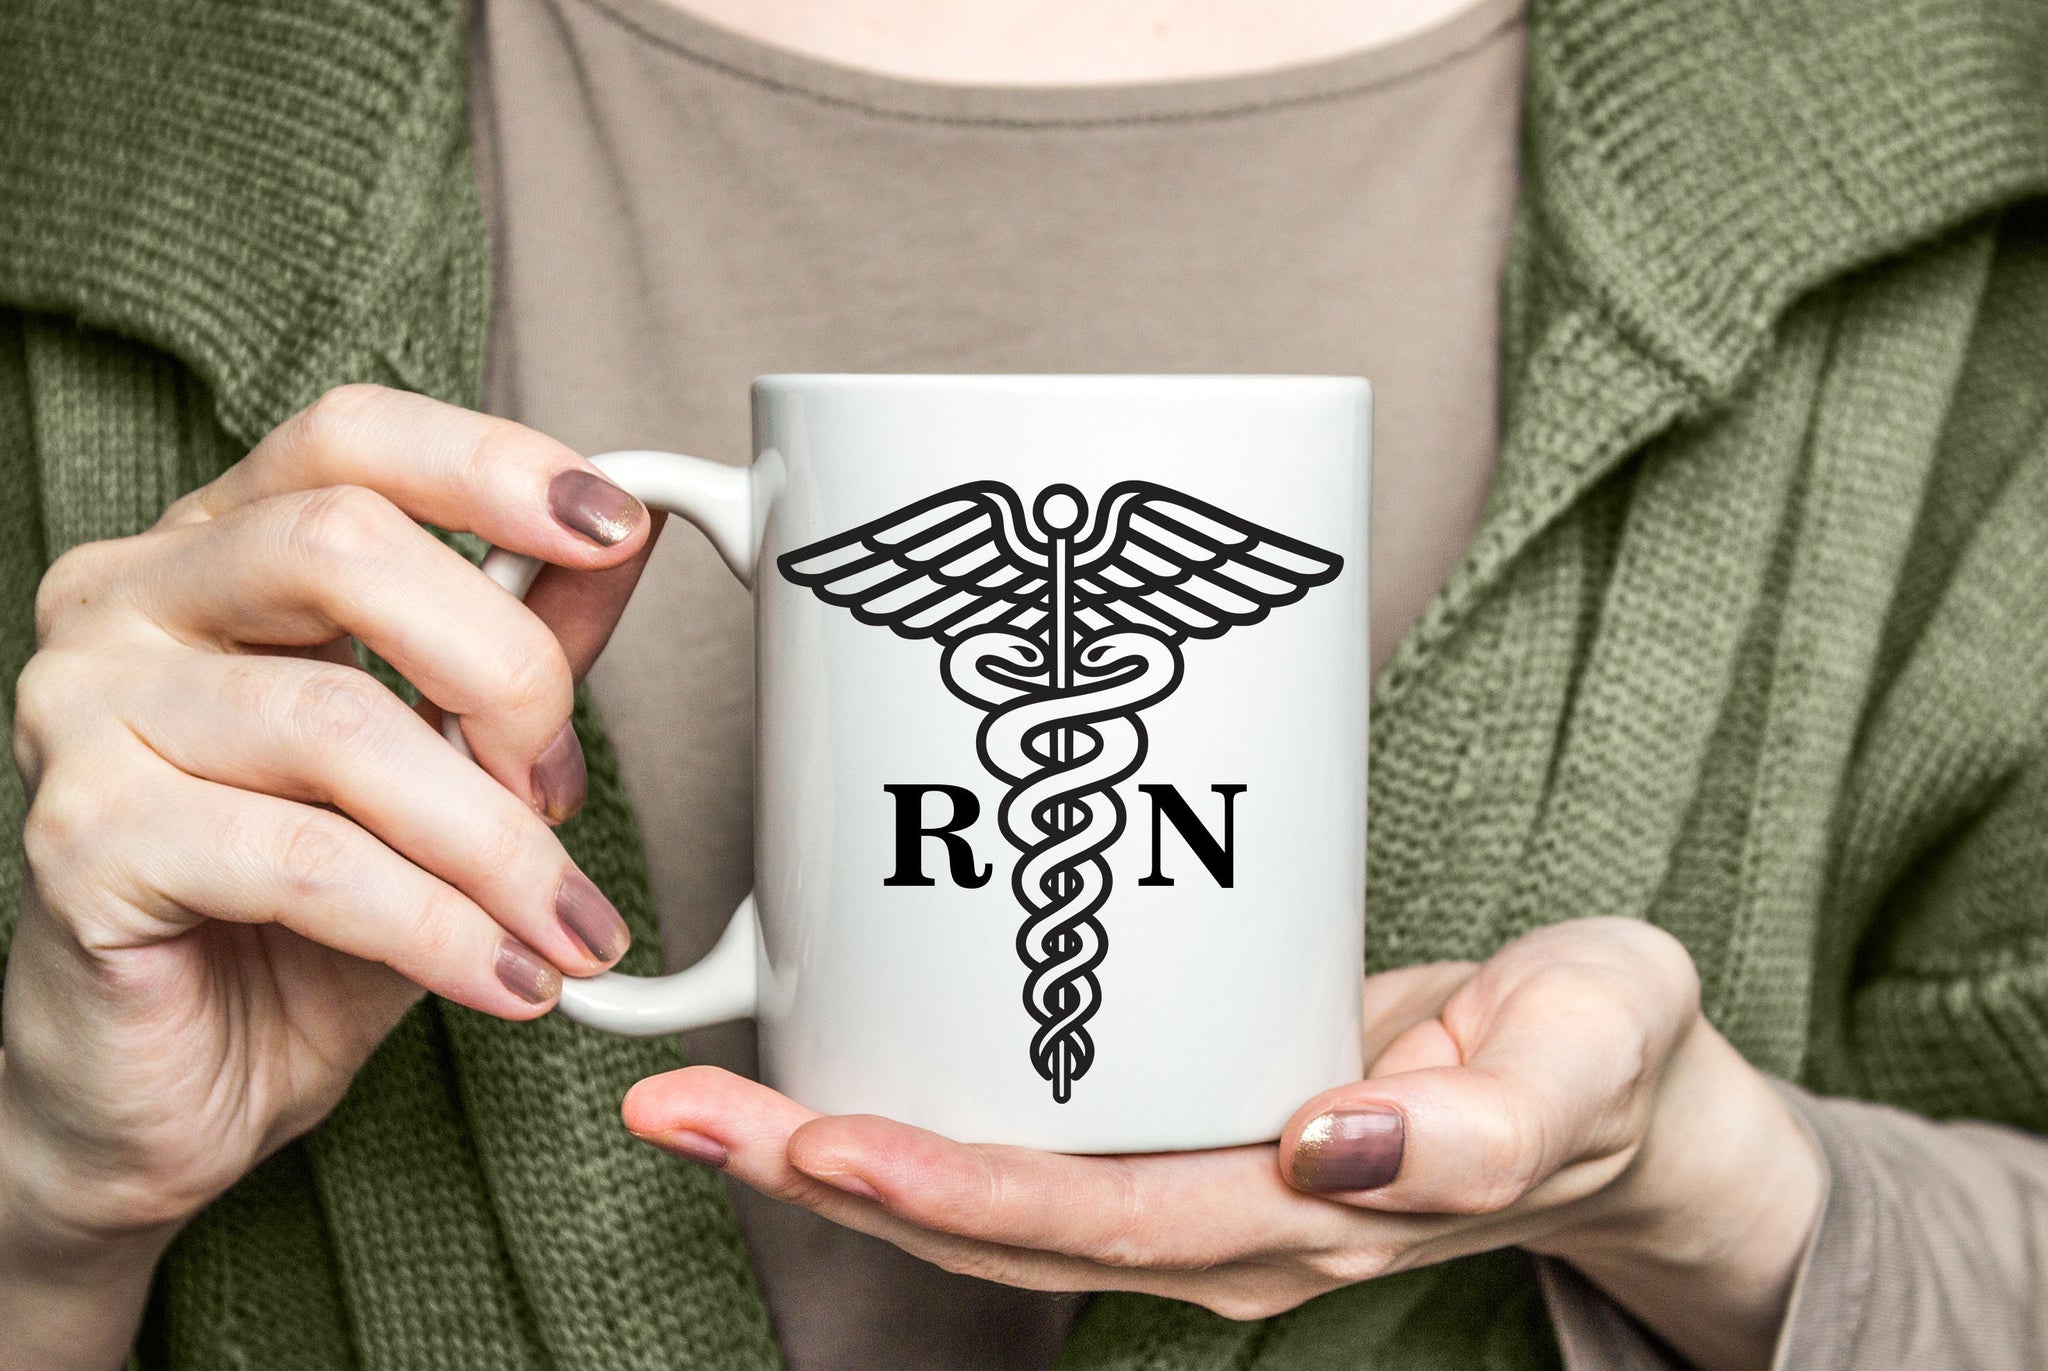 Registered Nurse Caduceus Coffee Mug Graduation Gift For Her Or Him, RN Medical Symbol Coffee Mug Gift For Nursing Student Grad